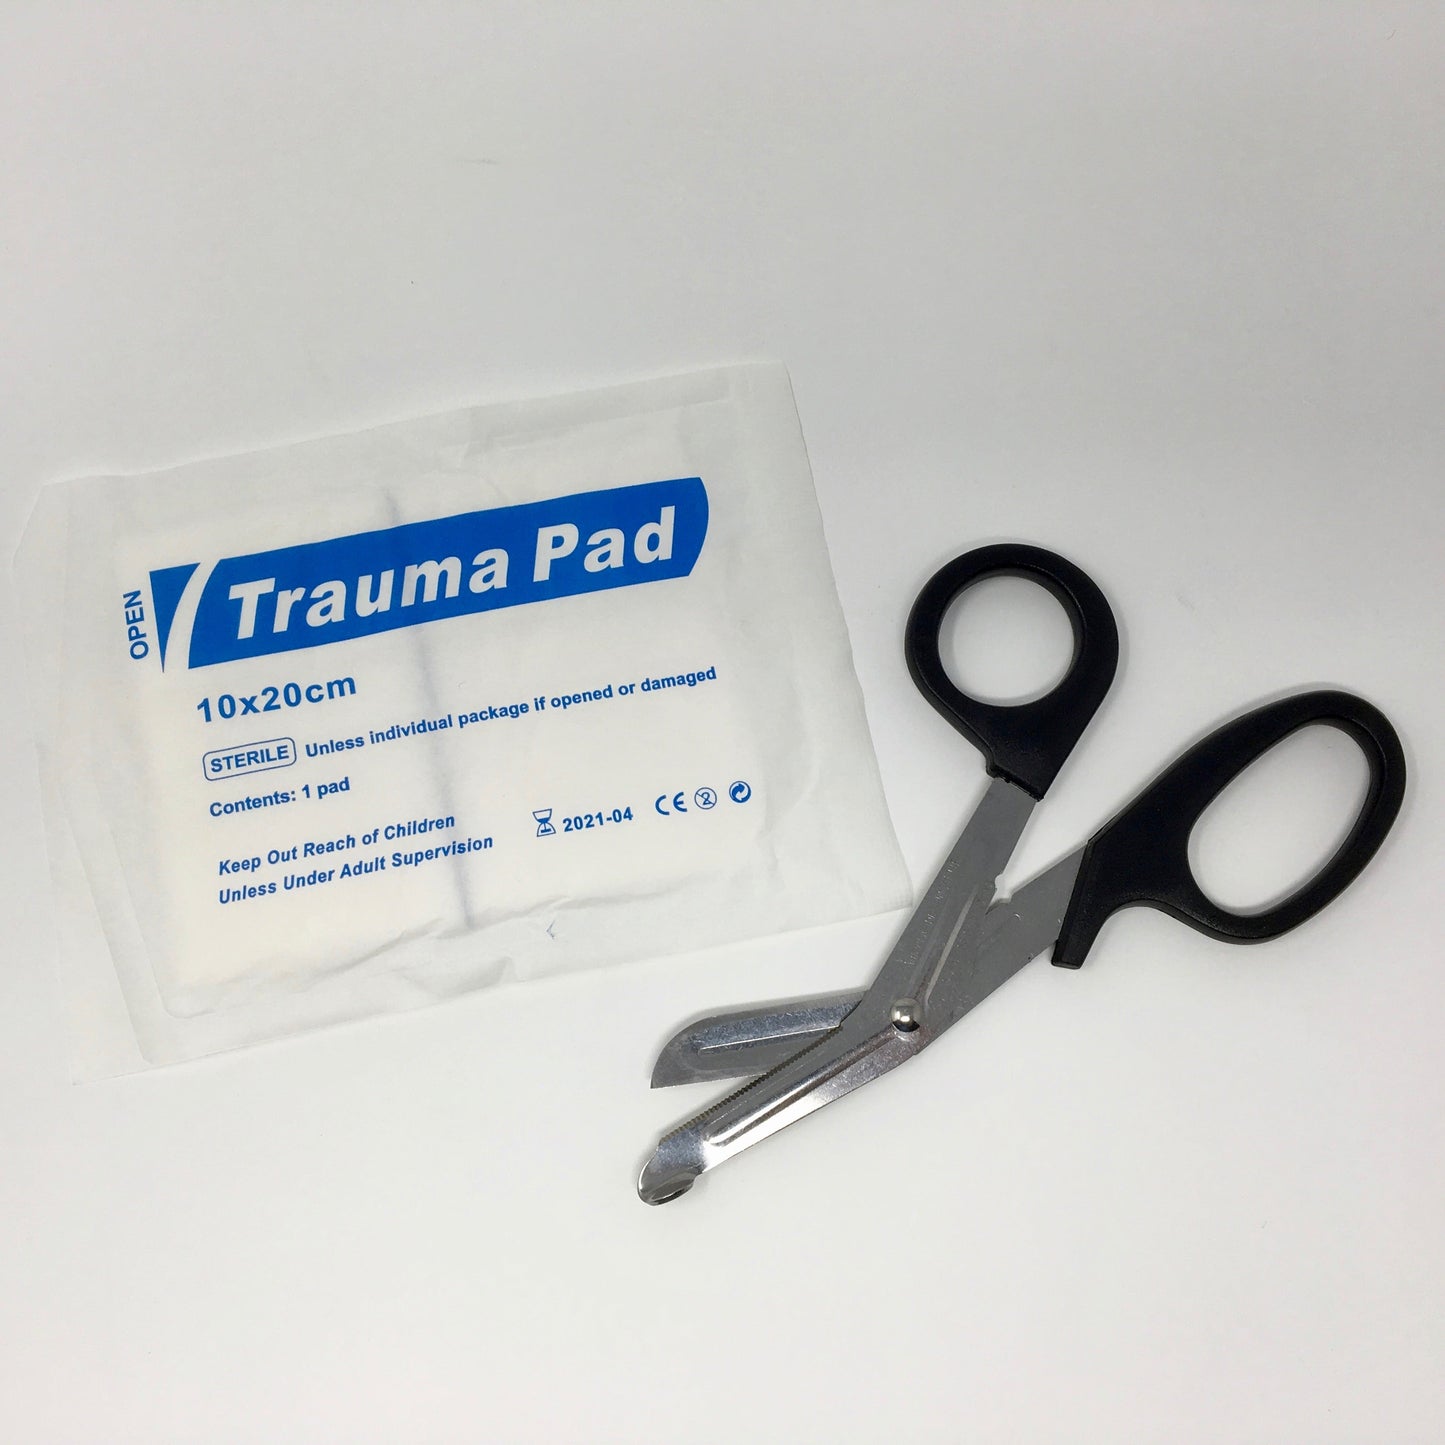 Trauma Pack for Hemorrhage and Limb Injury (with Aluminum Splint + Combat Emergency Bandage) - AllaQuix™ - Stop Bleeding Quick Like the Pros!